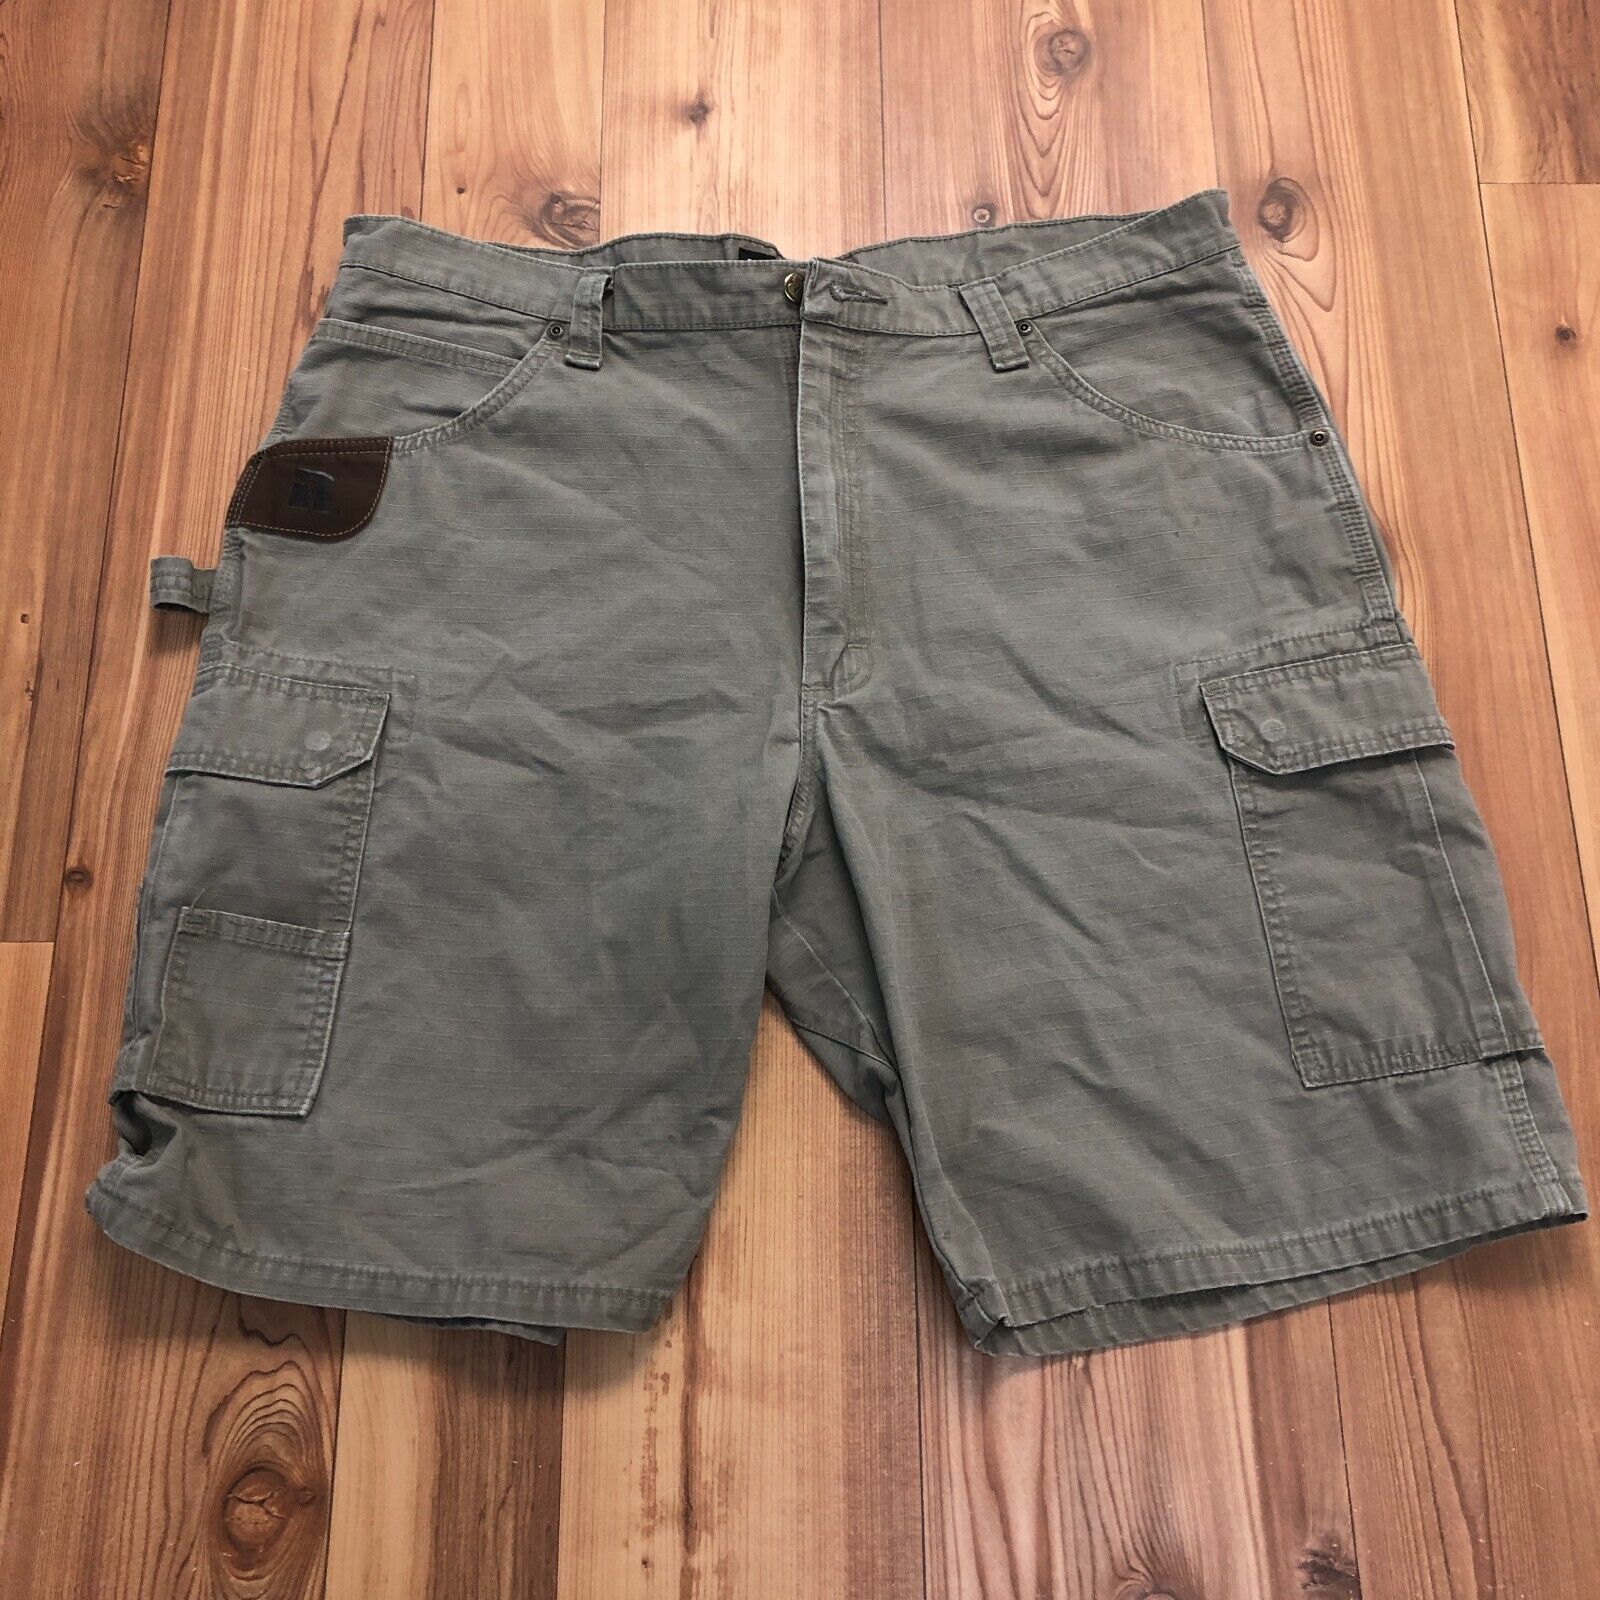 Wrangler Riggs Workwear Brown Cargo Flat Front Cotton Shorts Men's Size 40